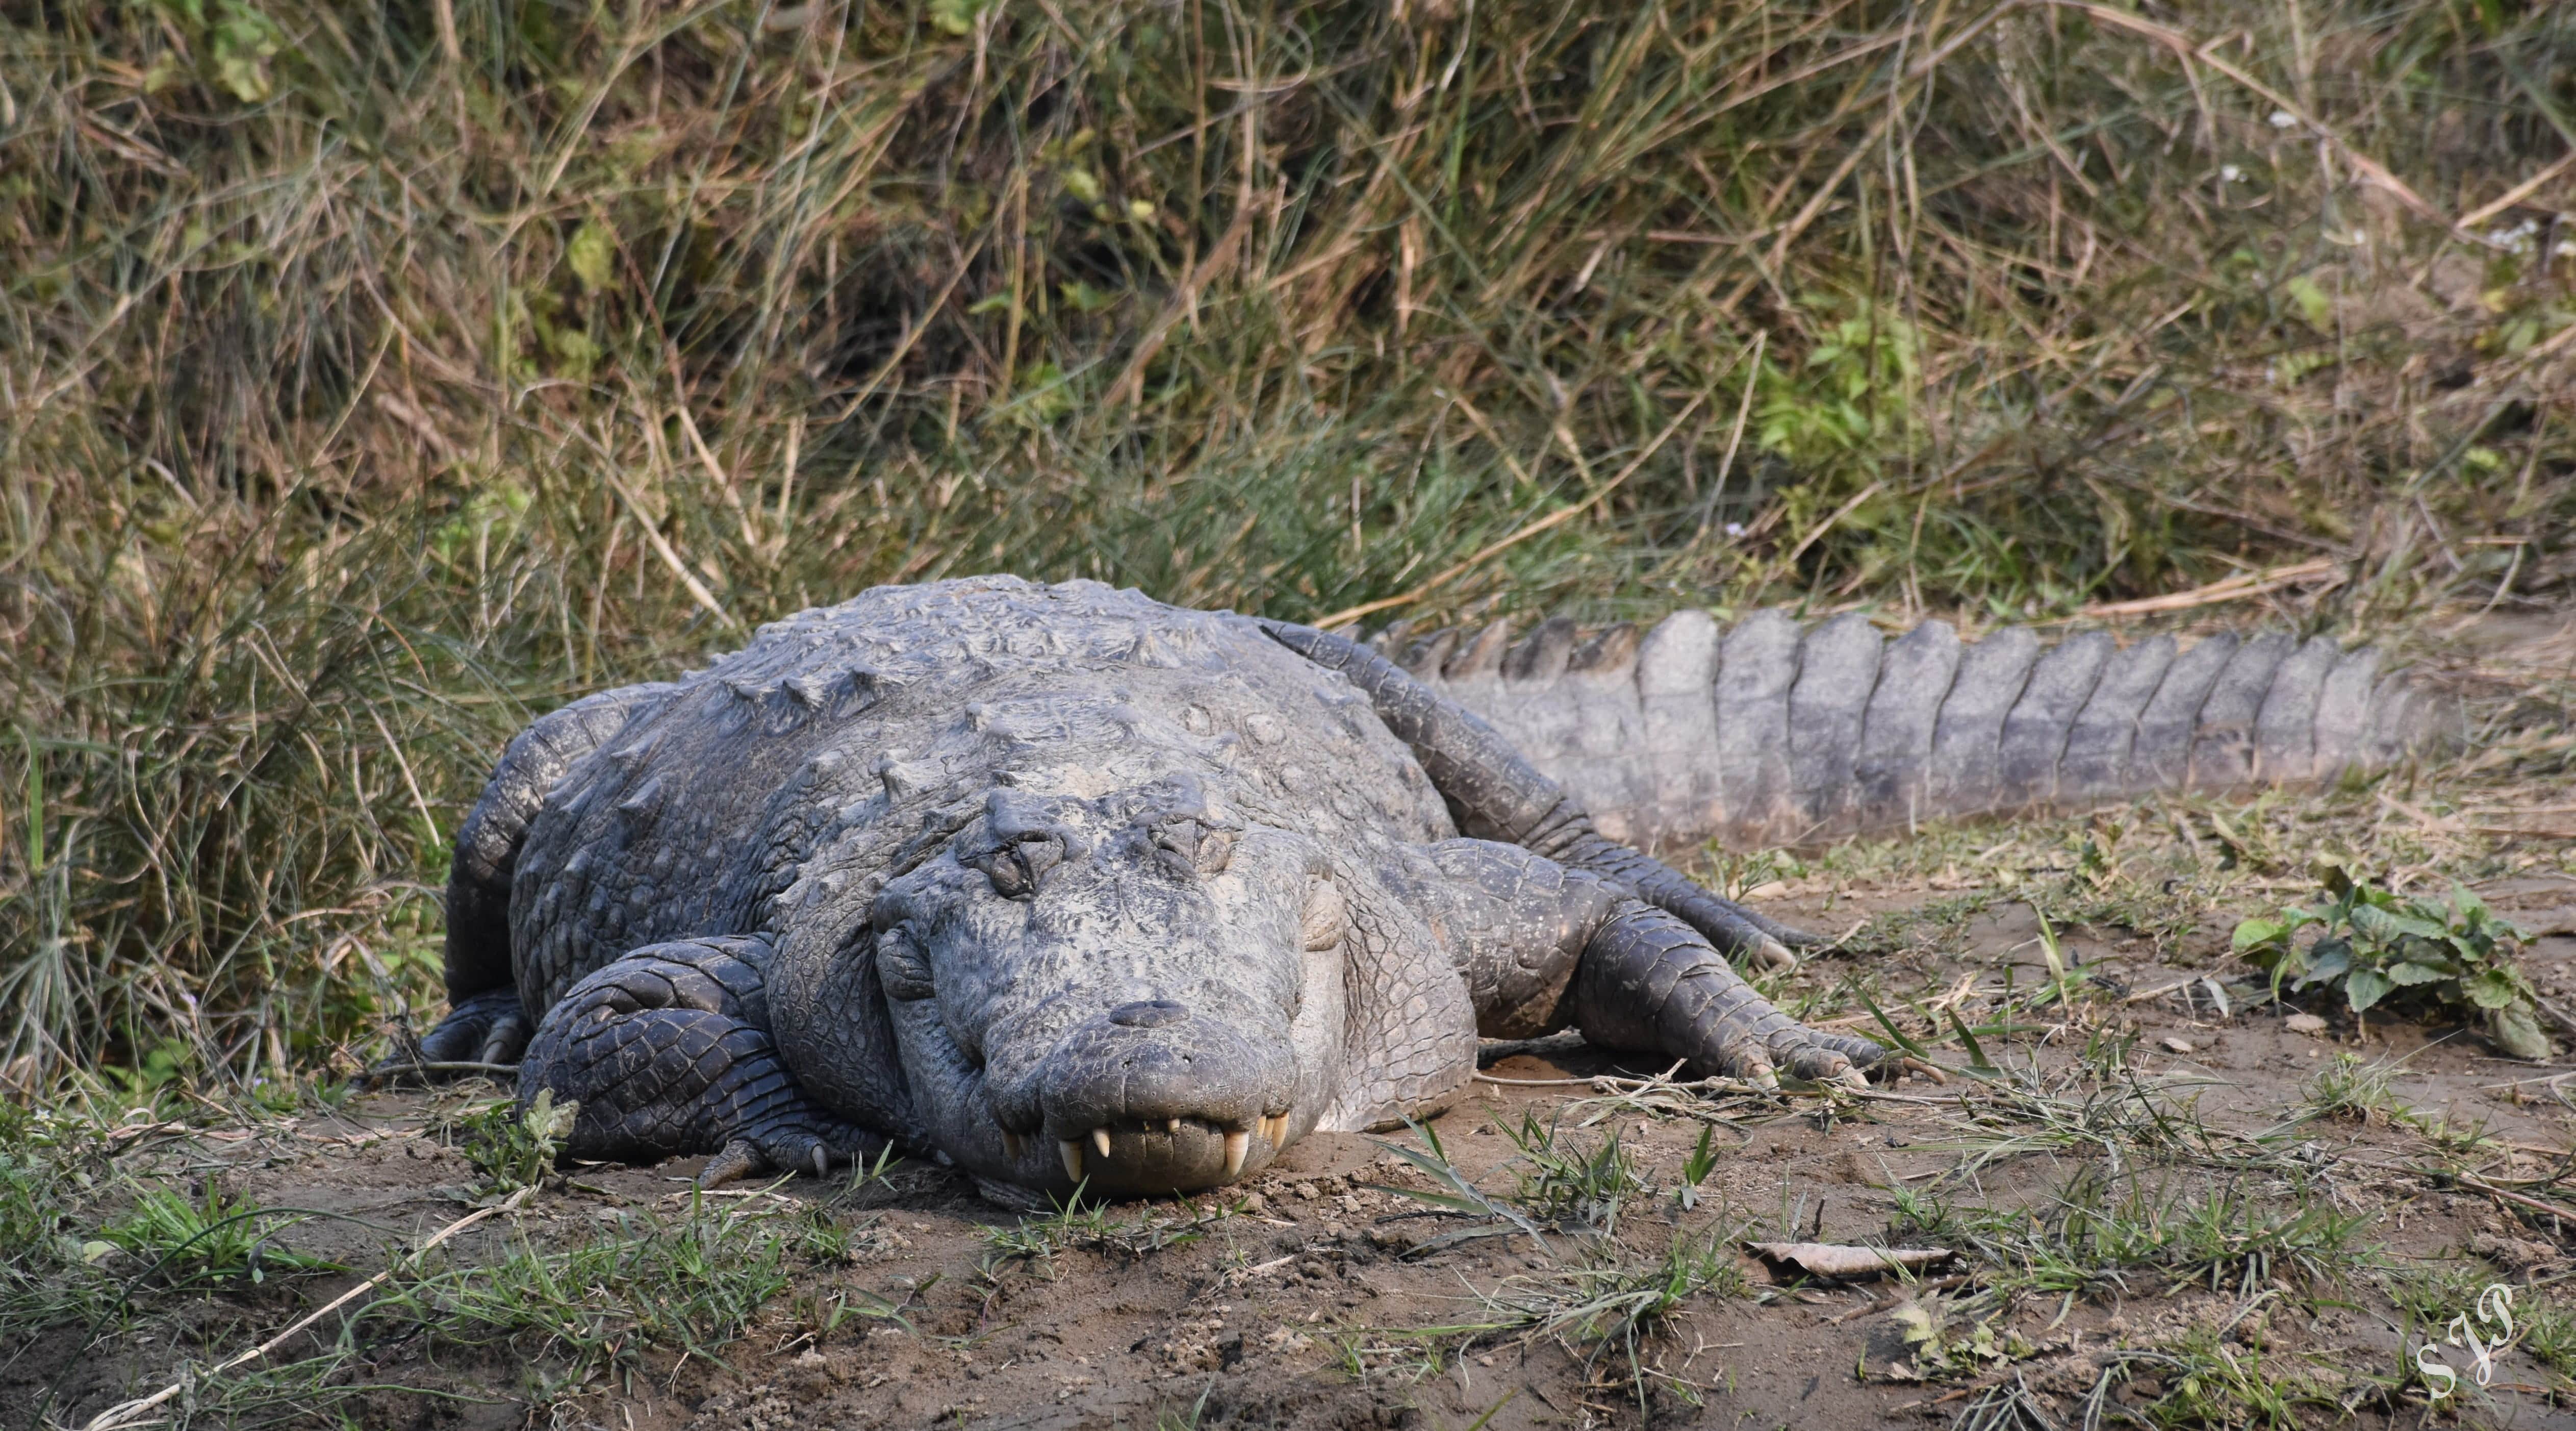 A large Crocodile sunbathing at Rapti riverbank